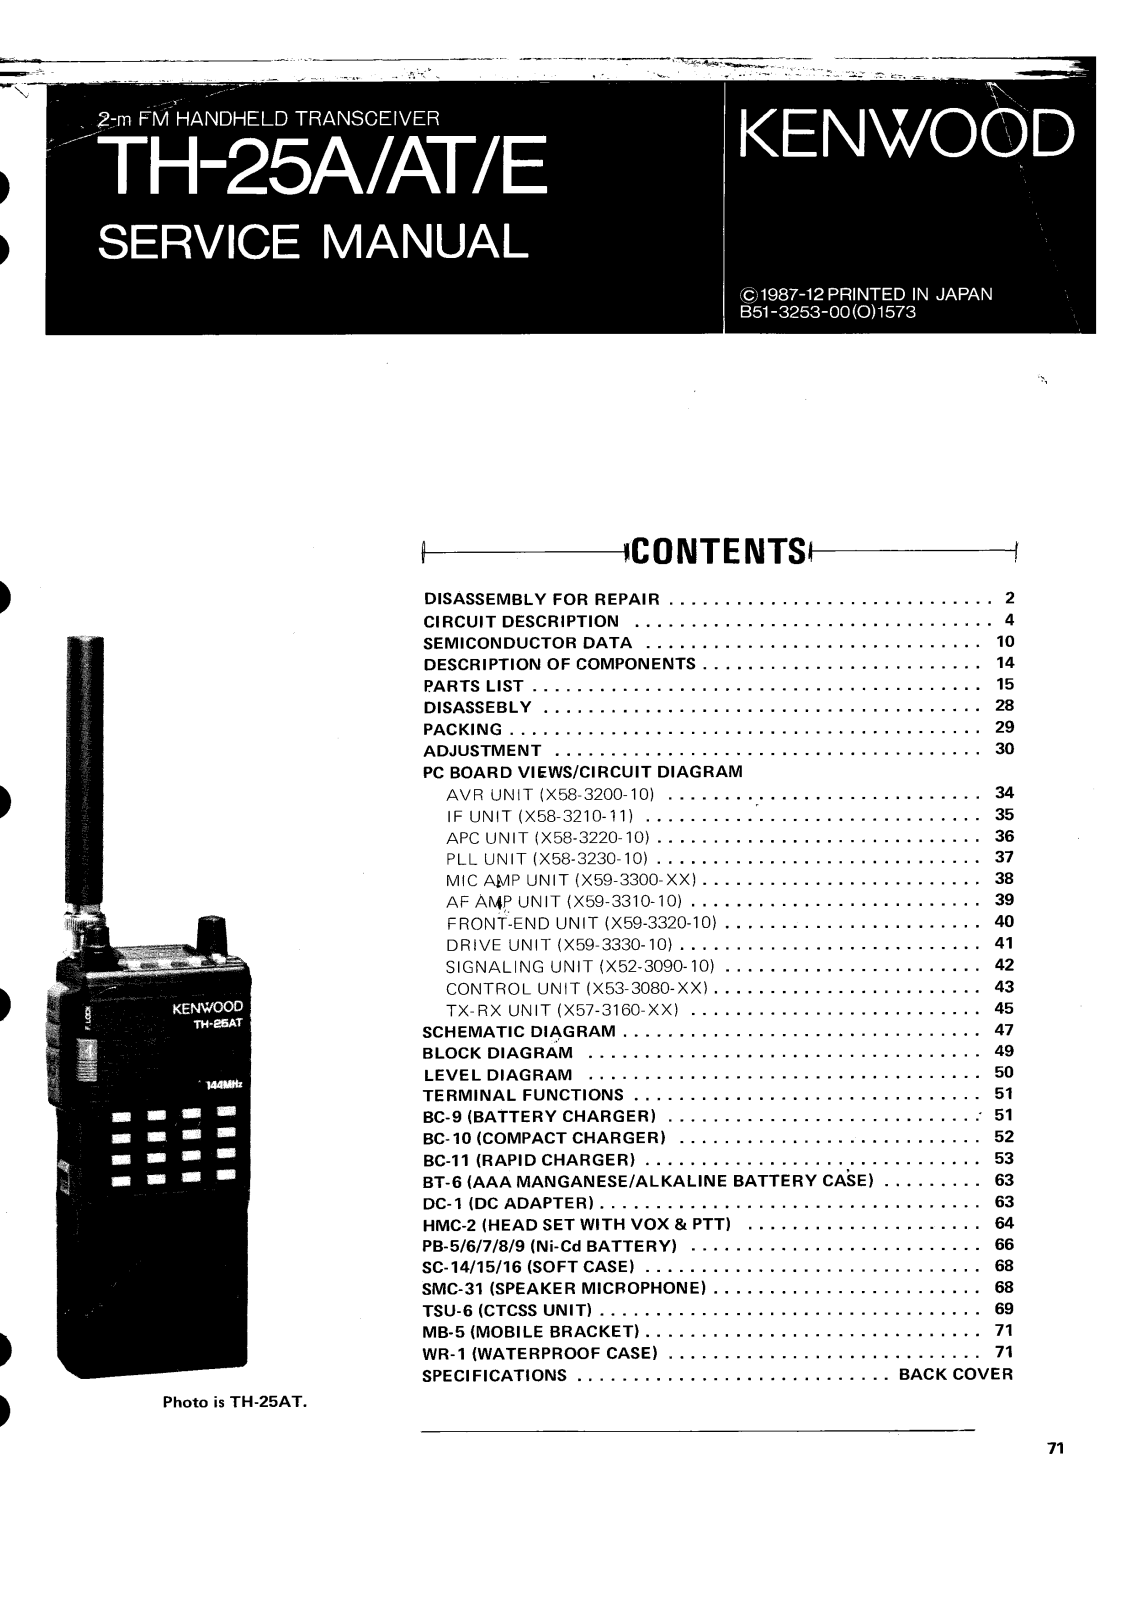 Kenwood TH-25 Service Manual